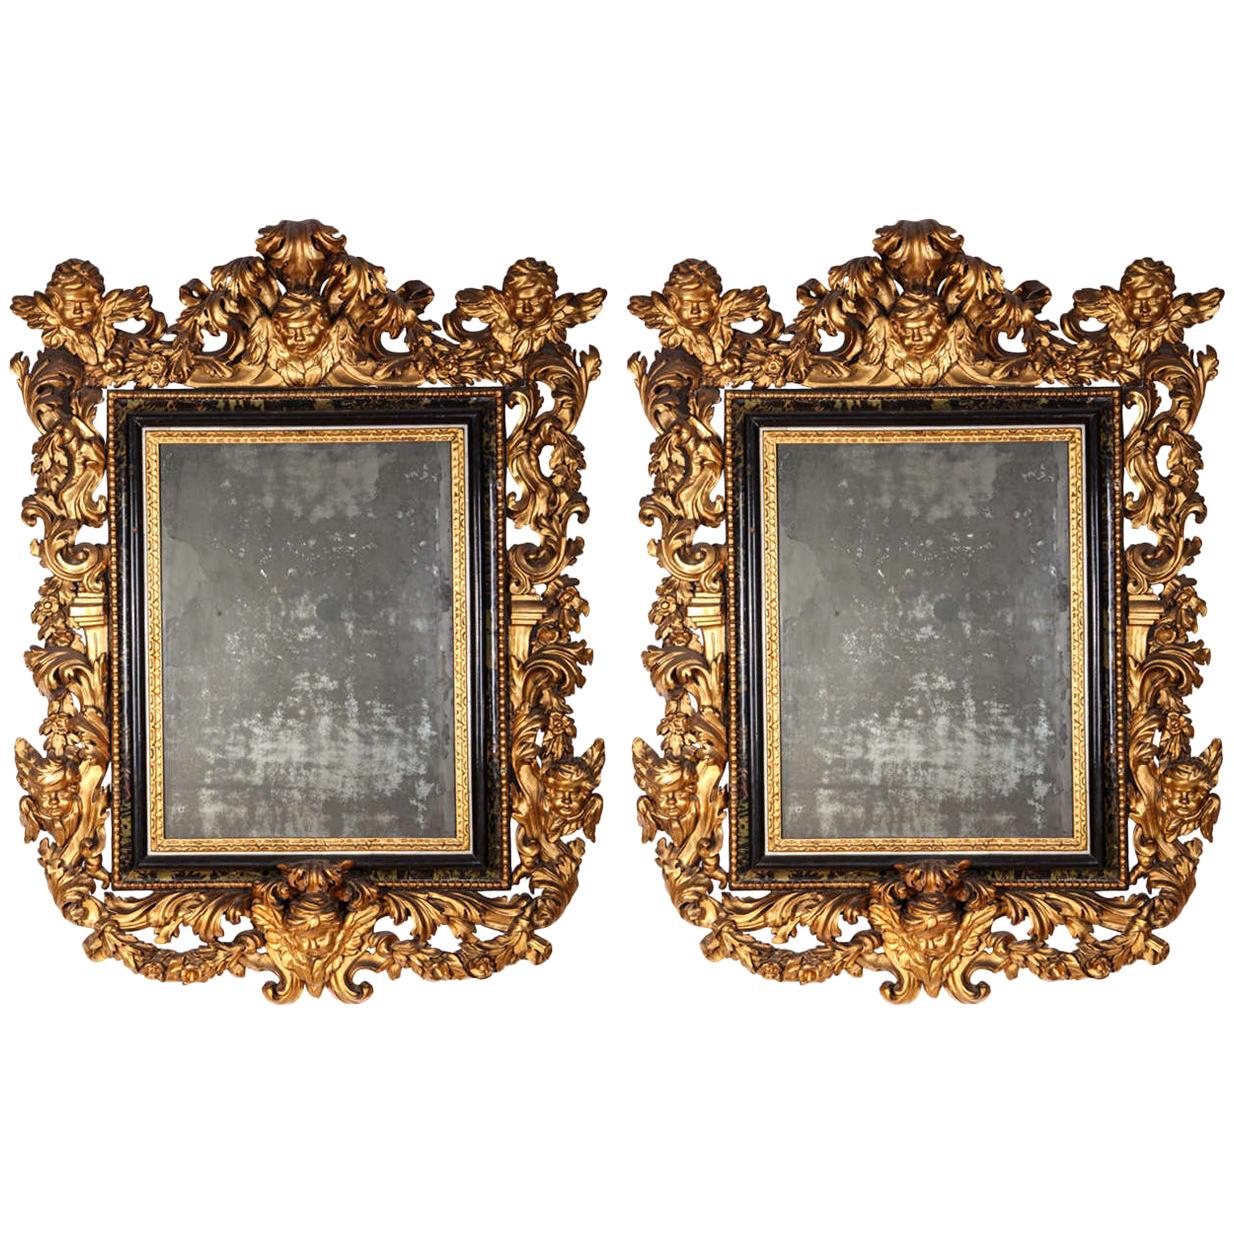 Pair of Rare Italian 17th Century Giltwood Baroque Mirrors, 1680 For Sale